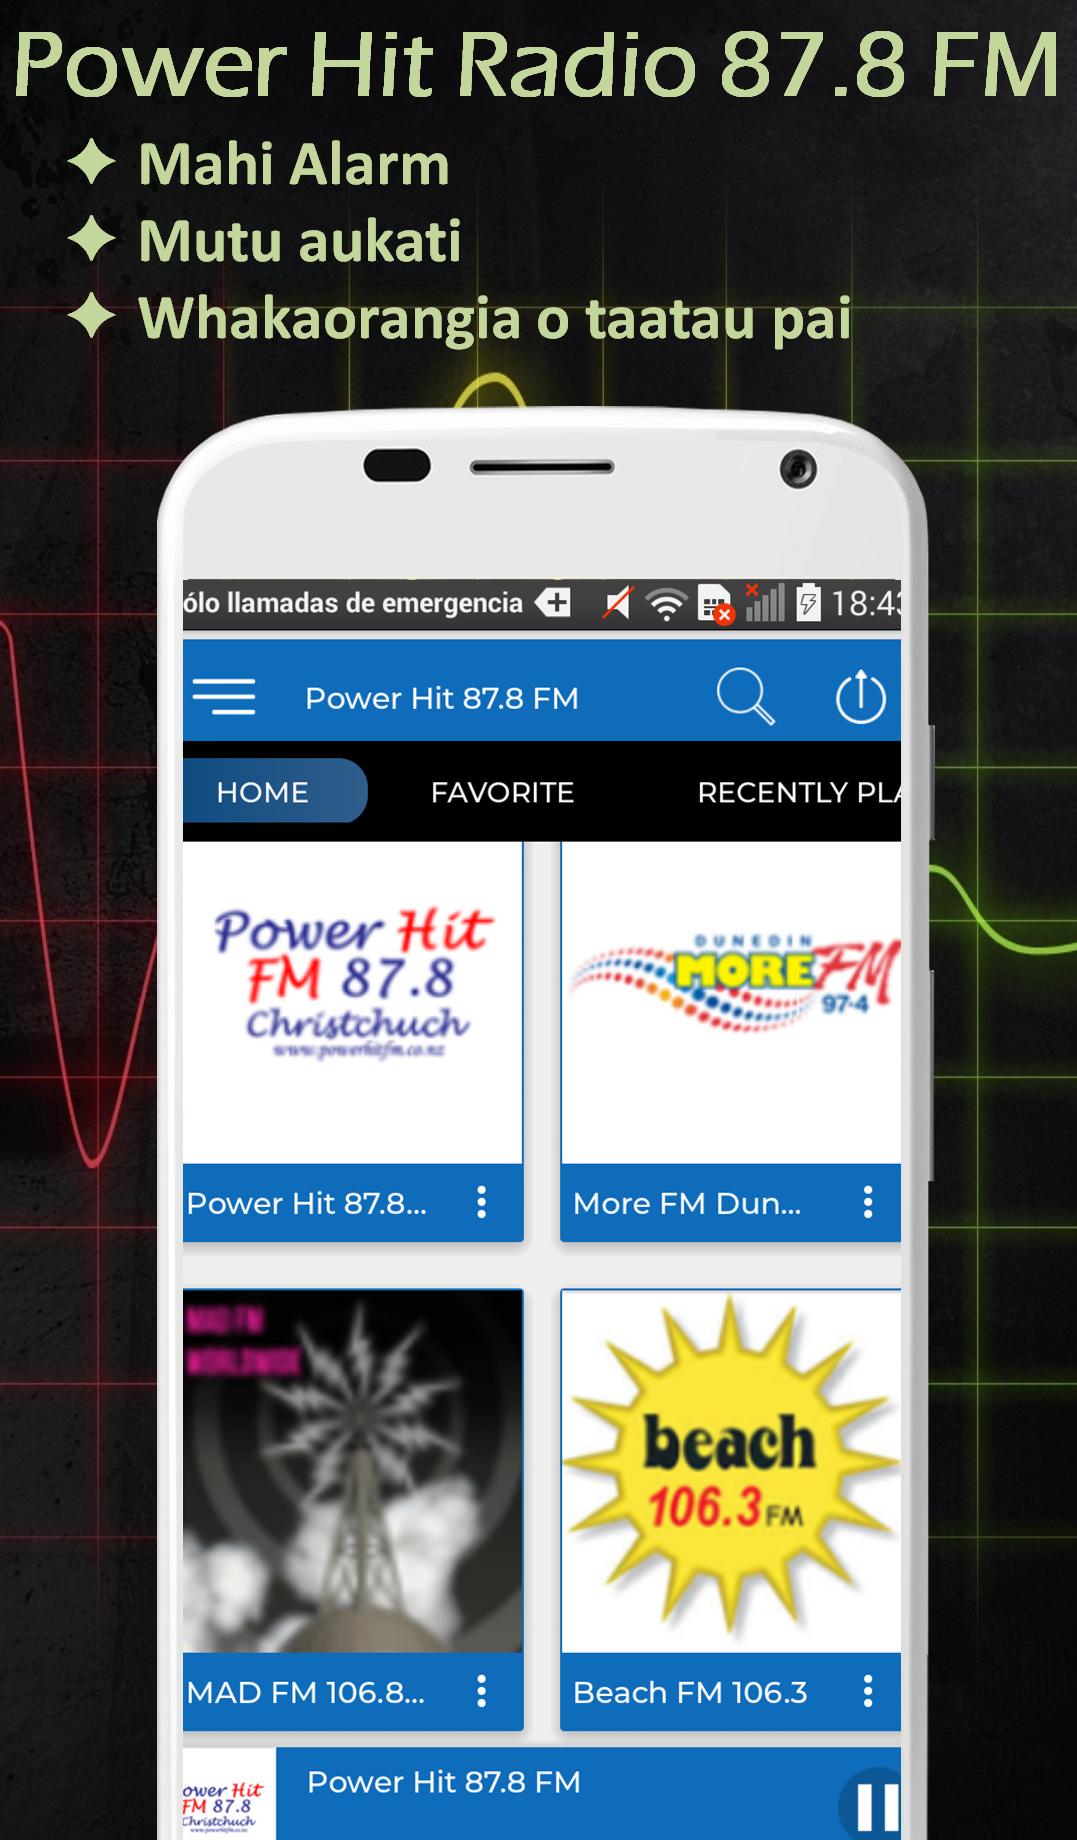 Power Hit Radio 87.8 FM + All New Zealand Radio Fm для Андроид - скачать APK